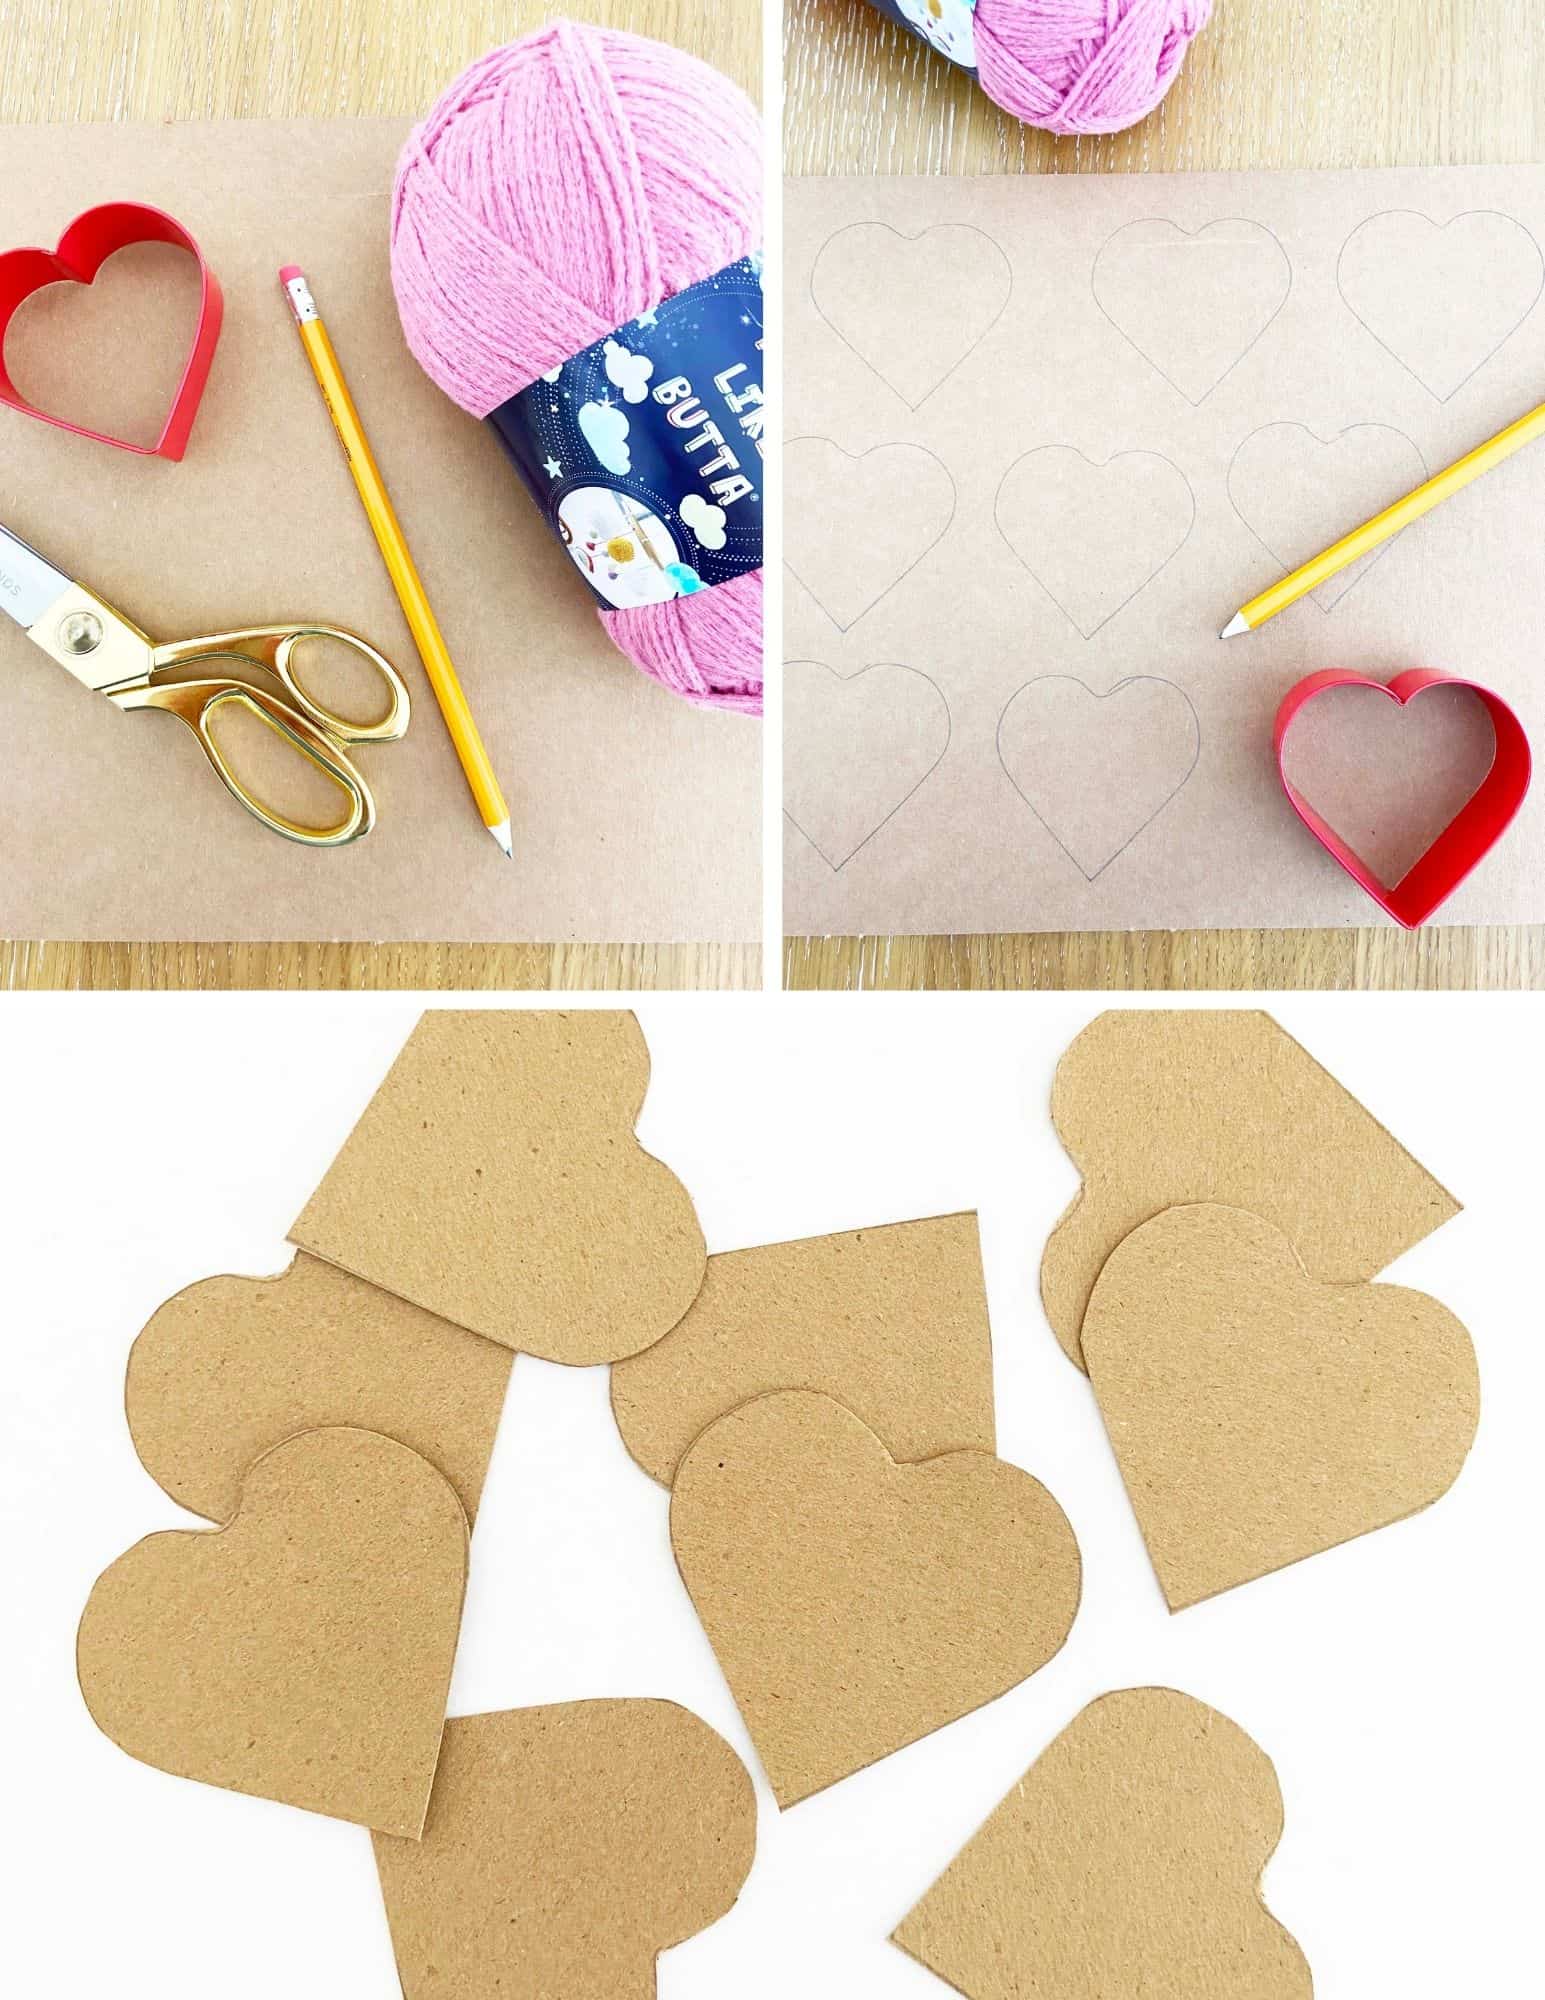 pink yarn, heart cutouts, gold scissors, heart shaped cookie cutter